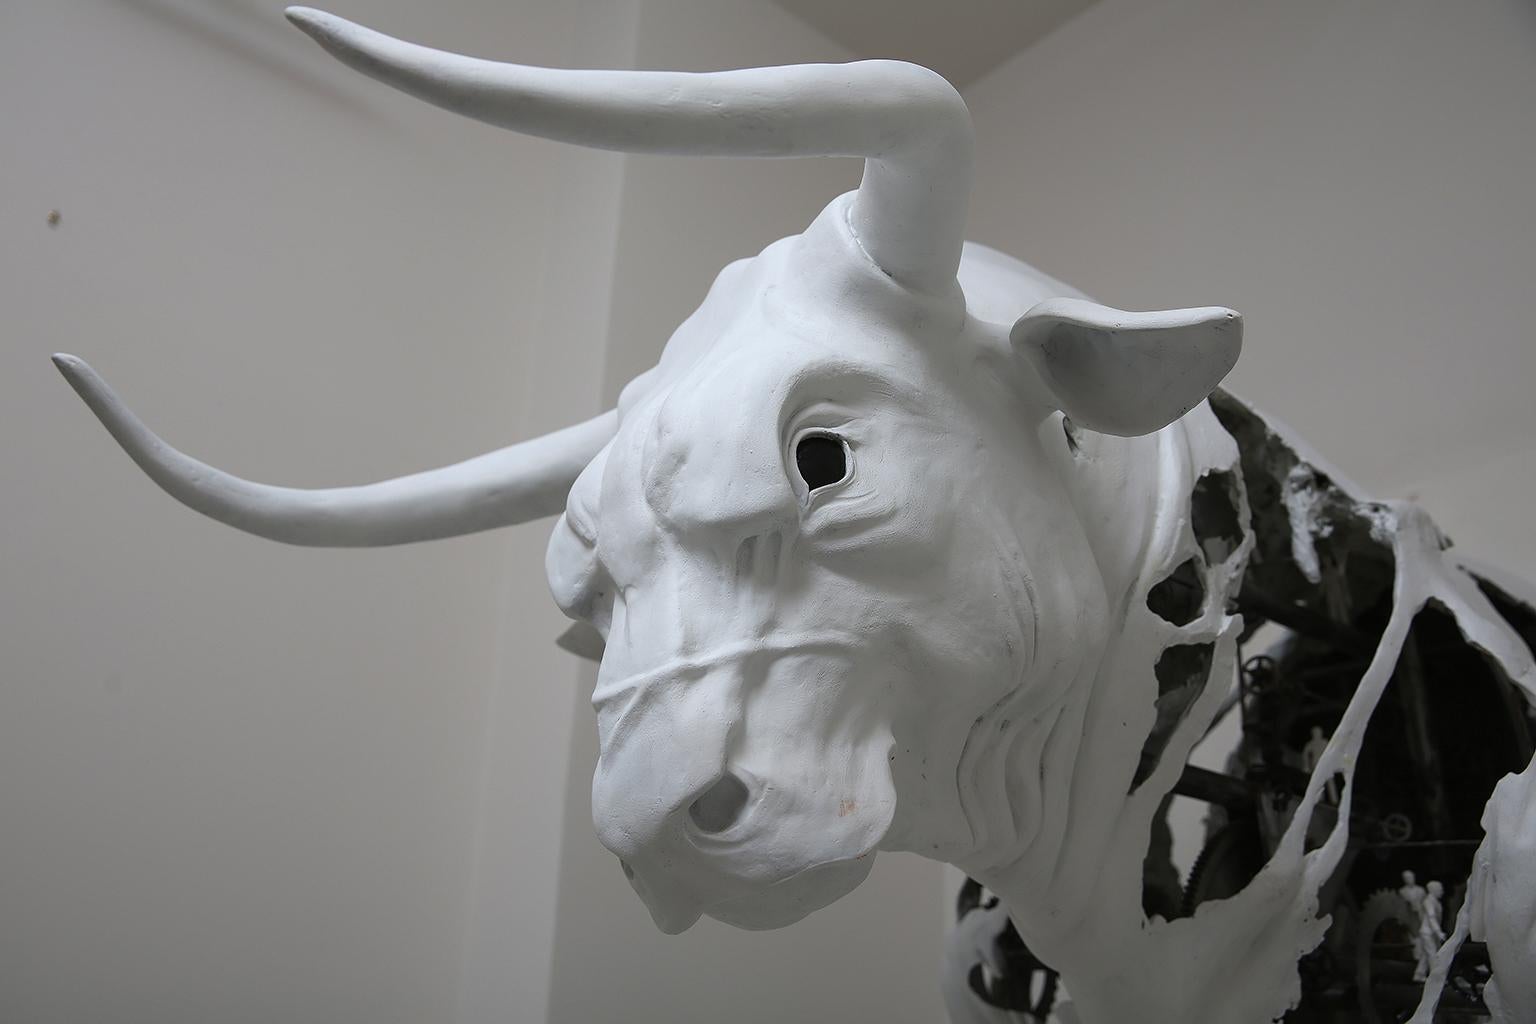 The Bull by Hobbes Vincent. White plaster and steel sculpture. Bull Bear Market 3